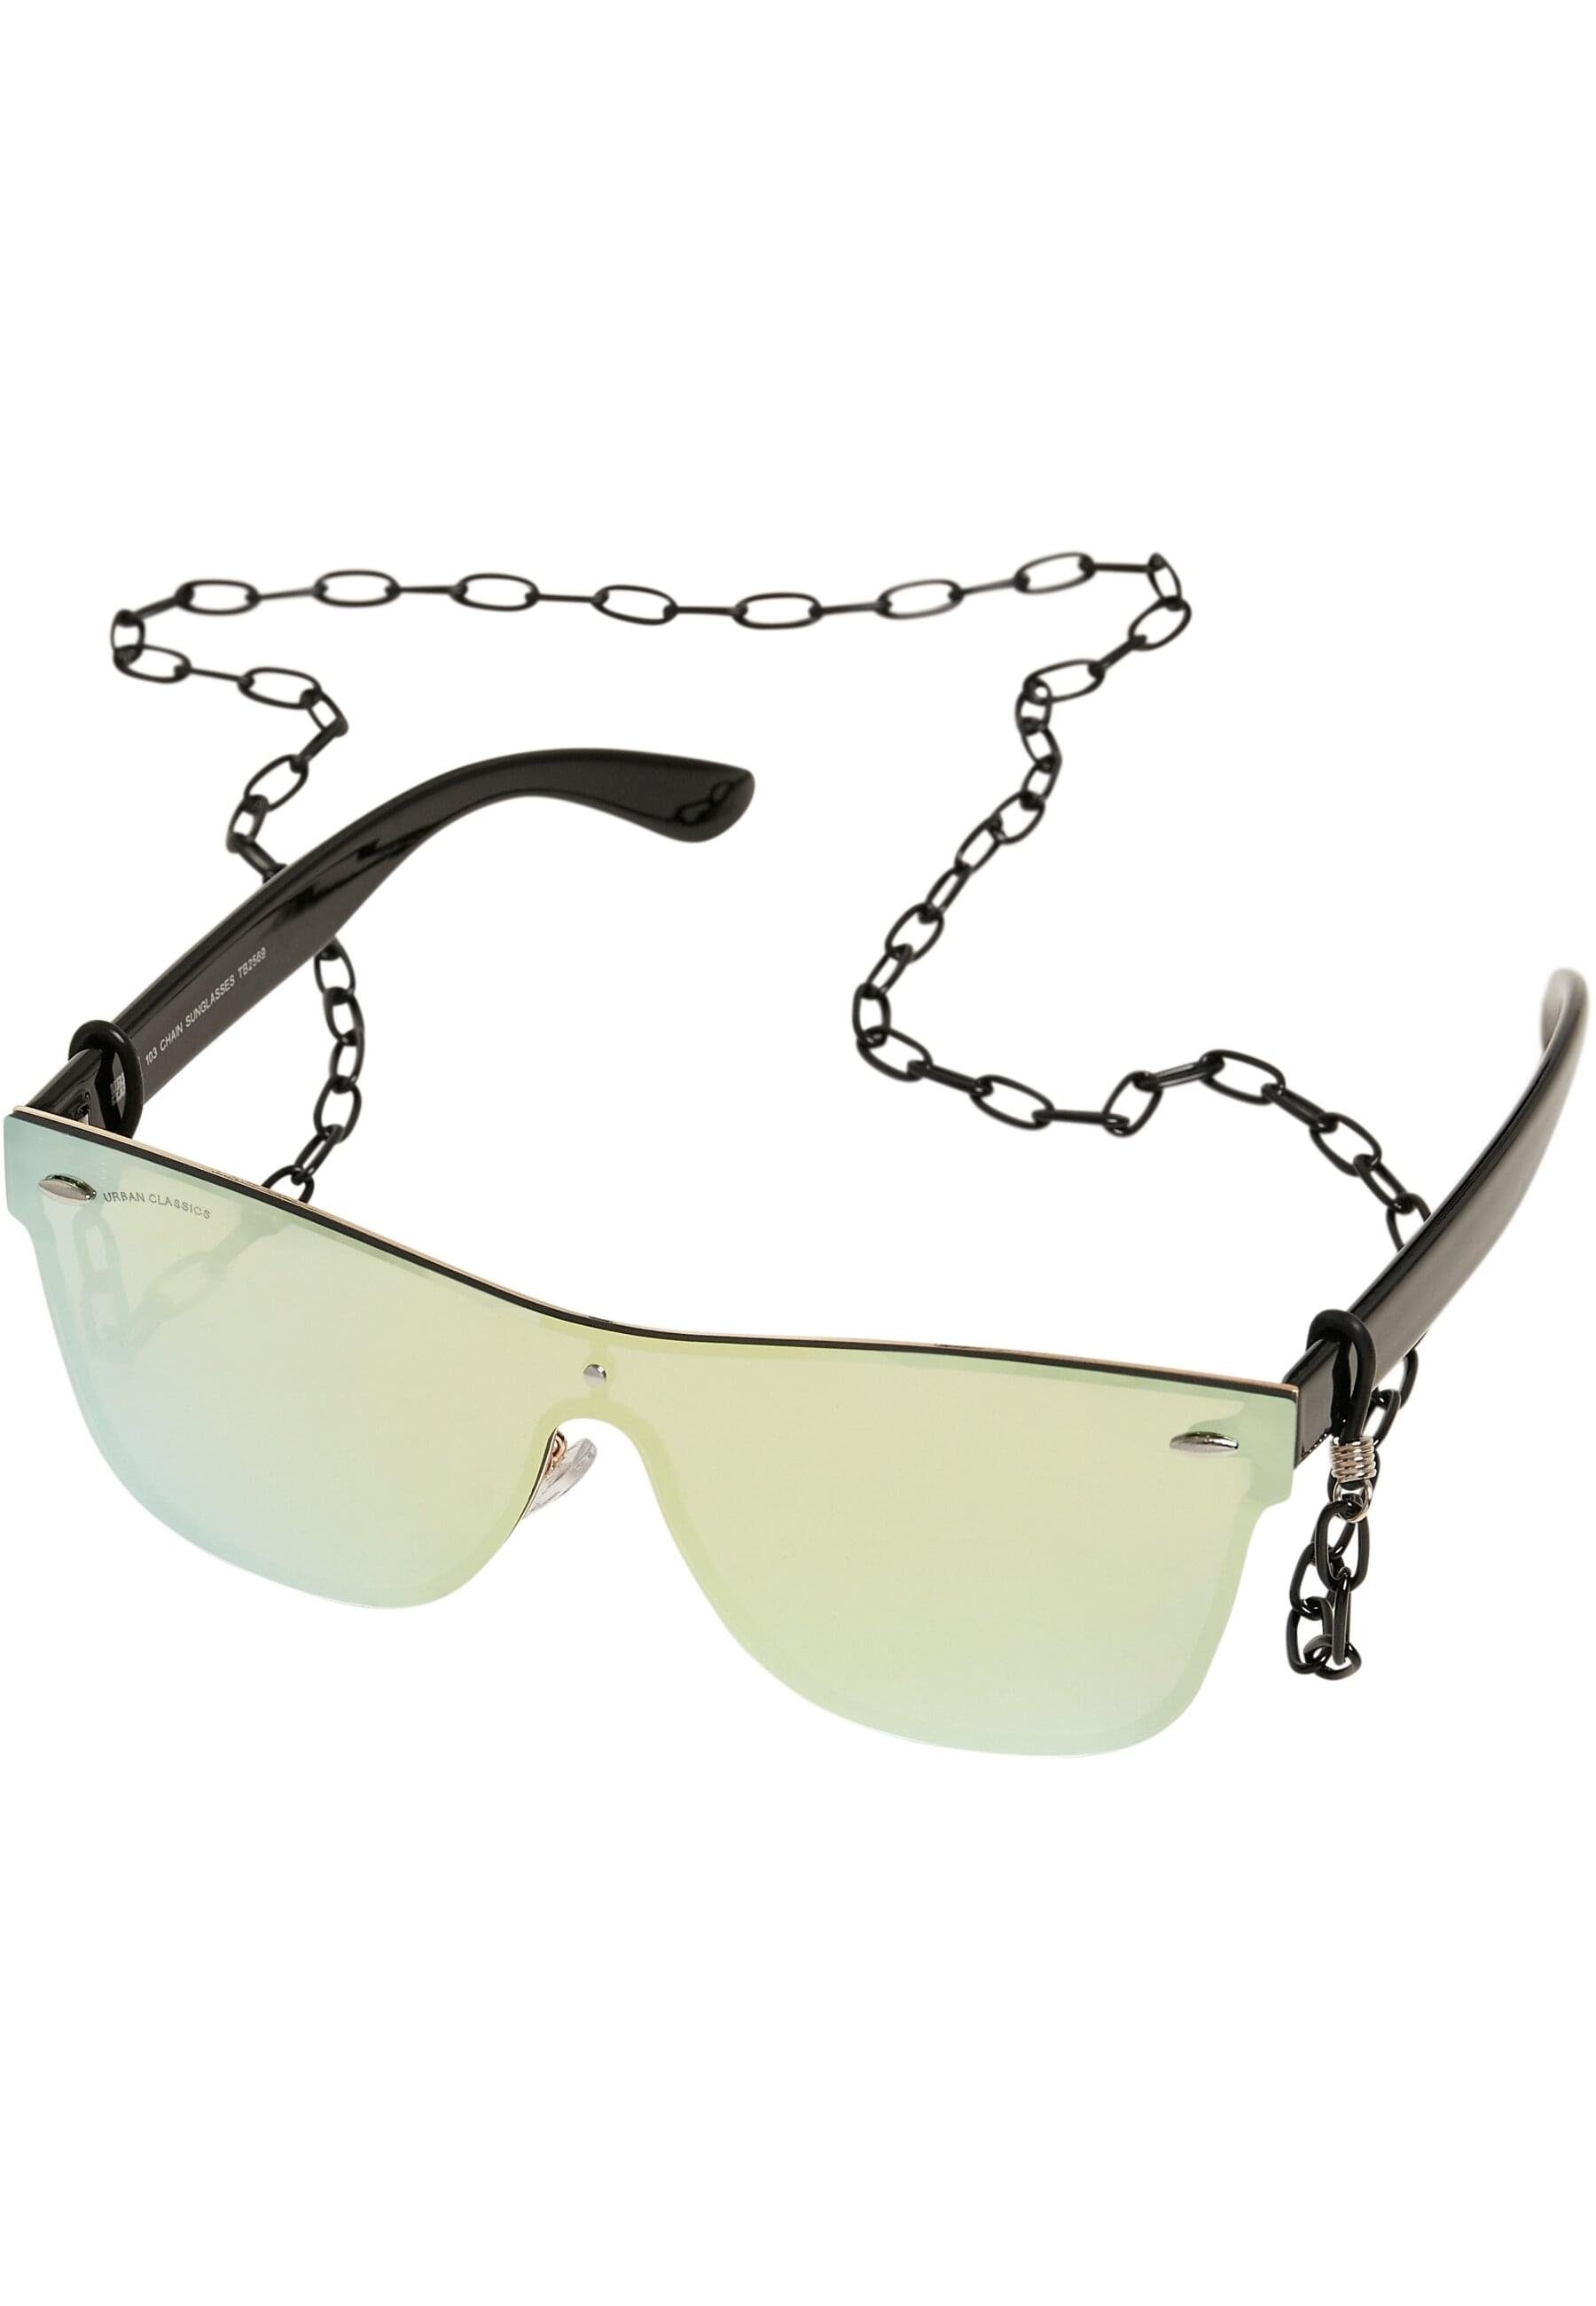 Sonnenbrille URBAN Unisex Sunglasses 103 black/gold CLASSICS Chain mirror